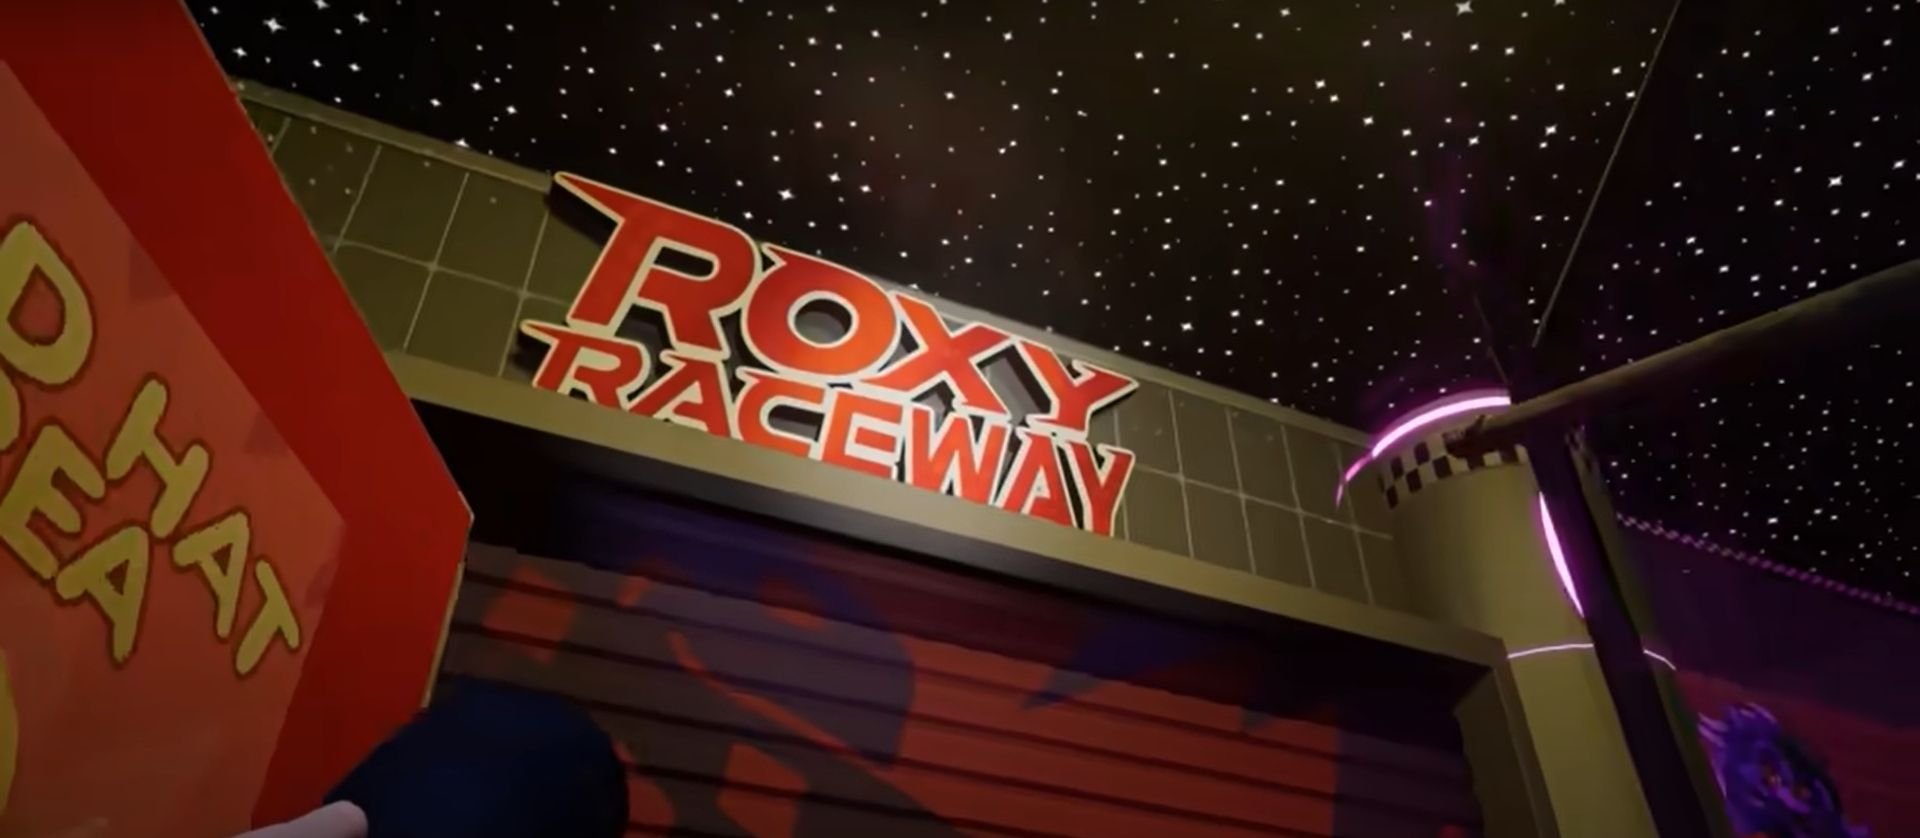 Roxy Raceway